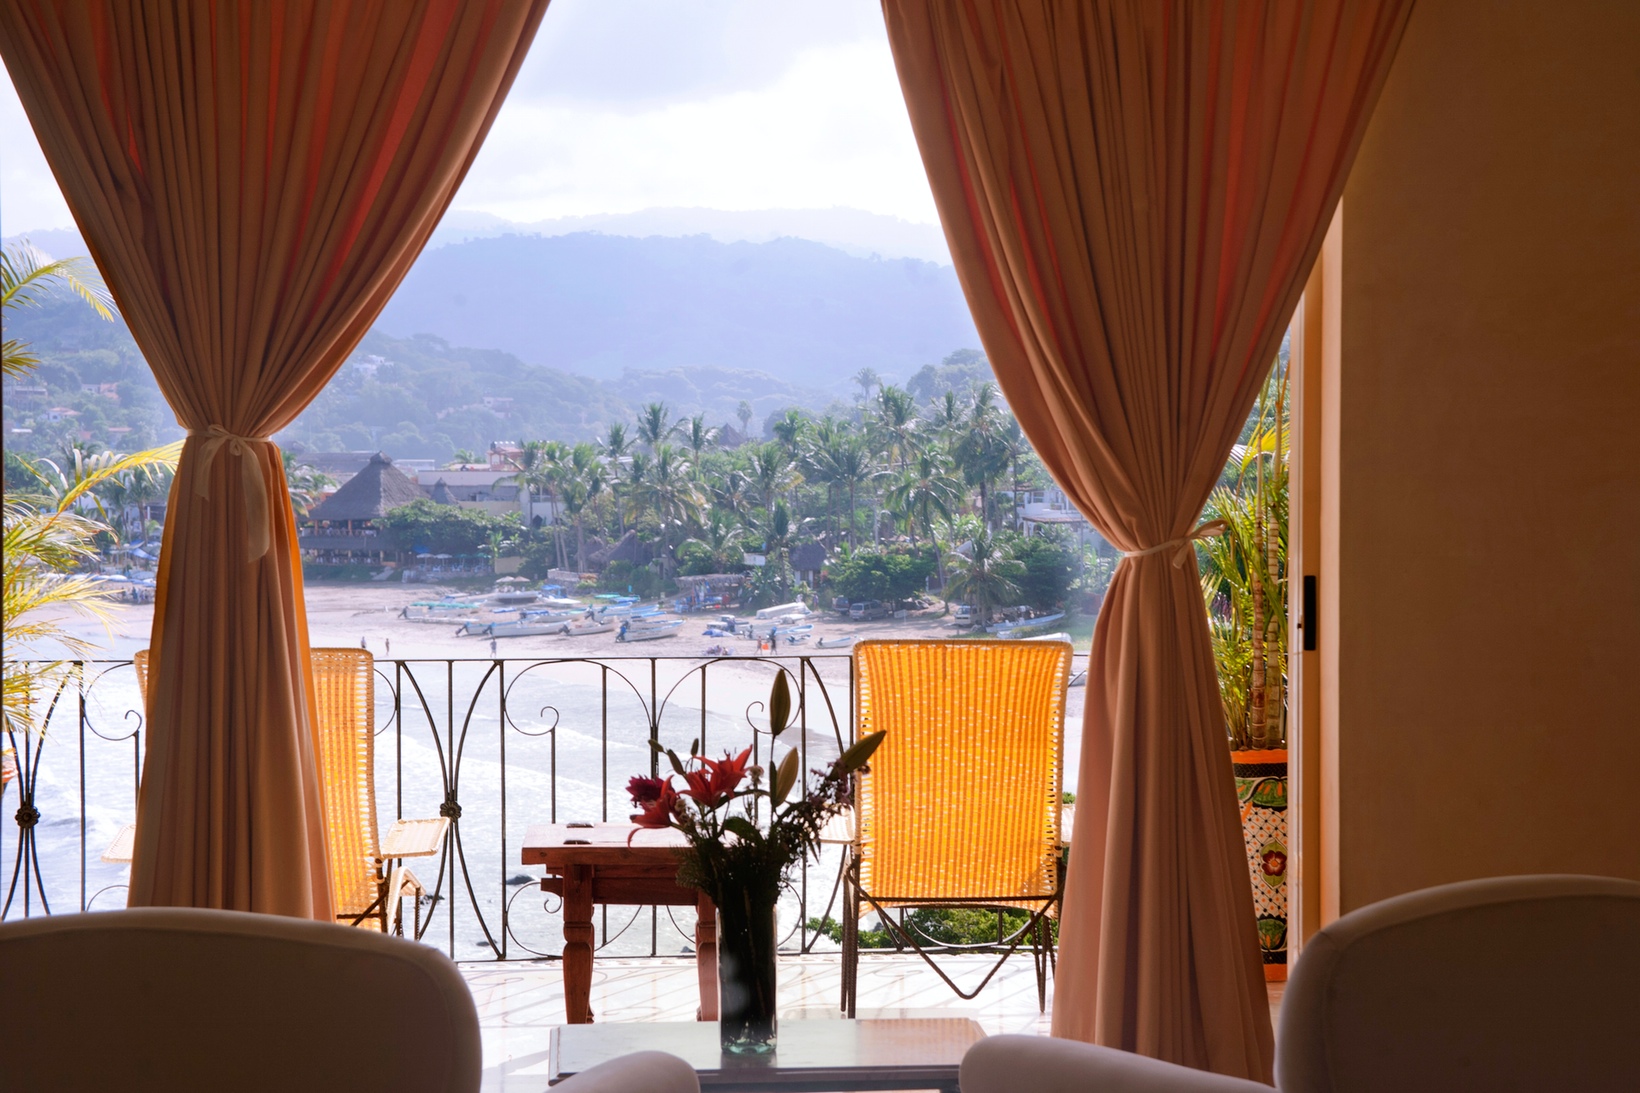 Hotelito at Amor Boutique Hotel in Sayulita Mexico. 1 bedroom ocean view luxury vacation rental.